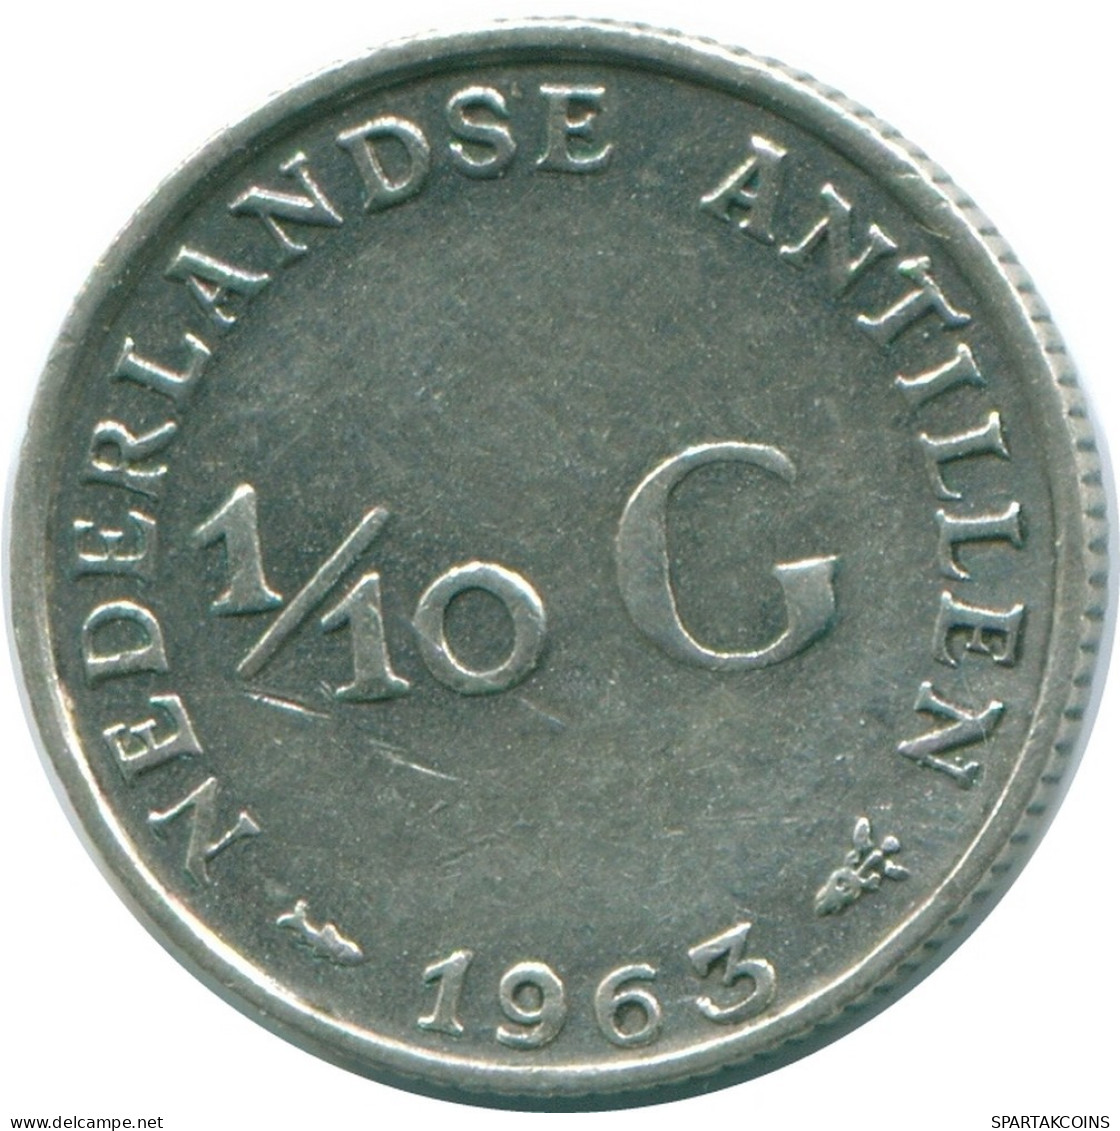 1/10 GULDEN 1963 NIEDERLÄNDISCHE ANTILLEN SILBER Koloniale Münze #NL12529.3.D.A - Netherlands Antilles